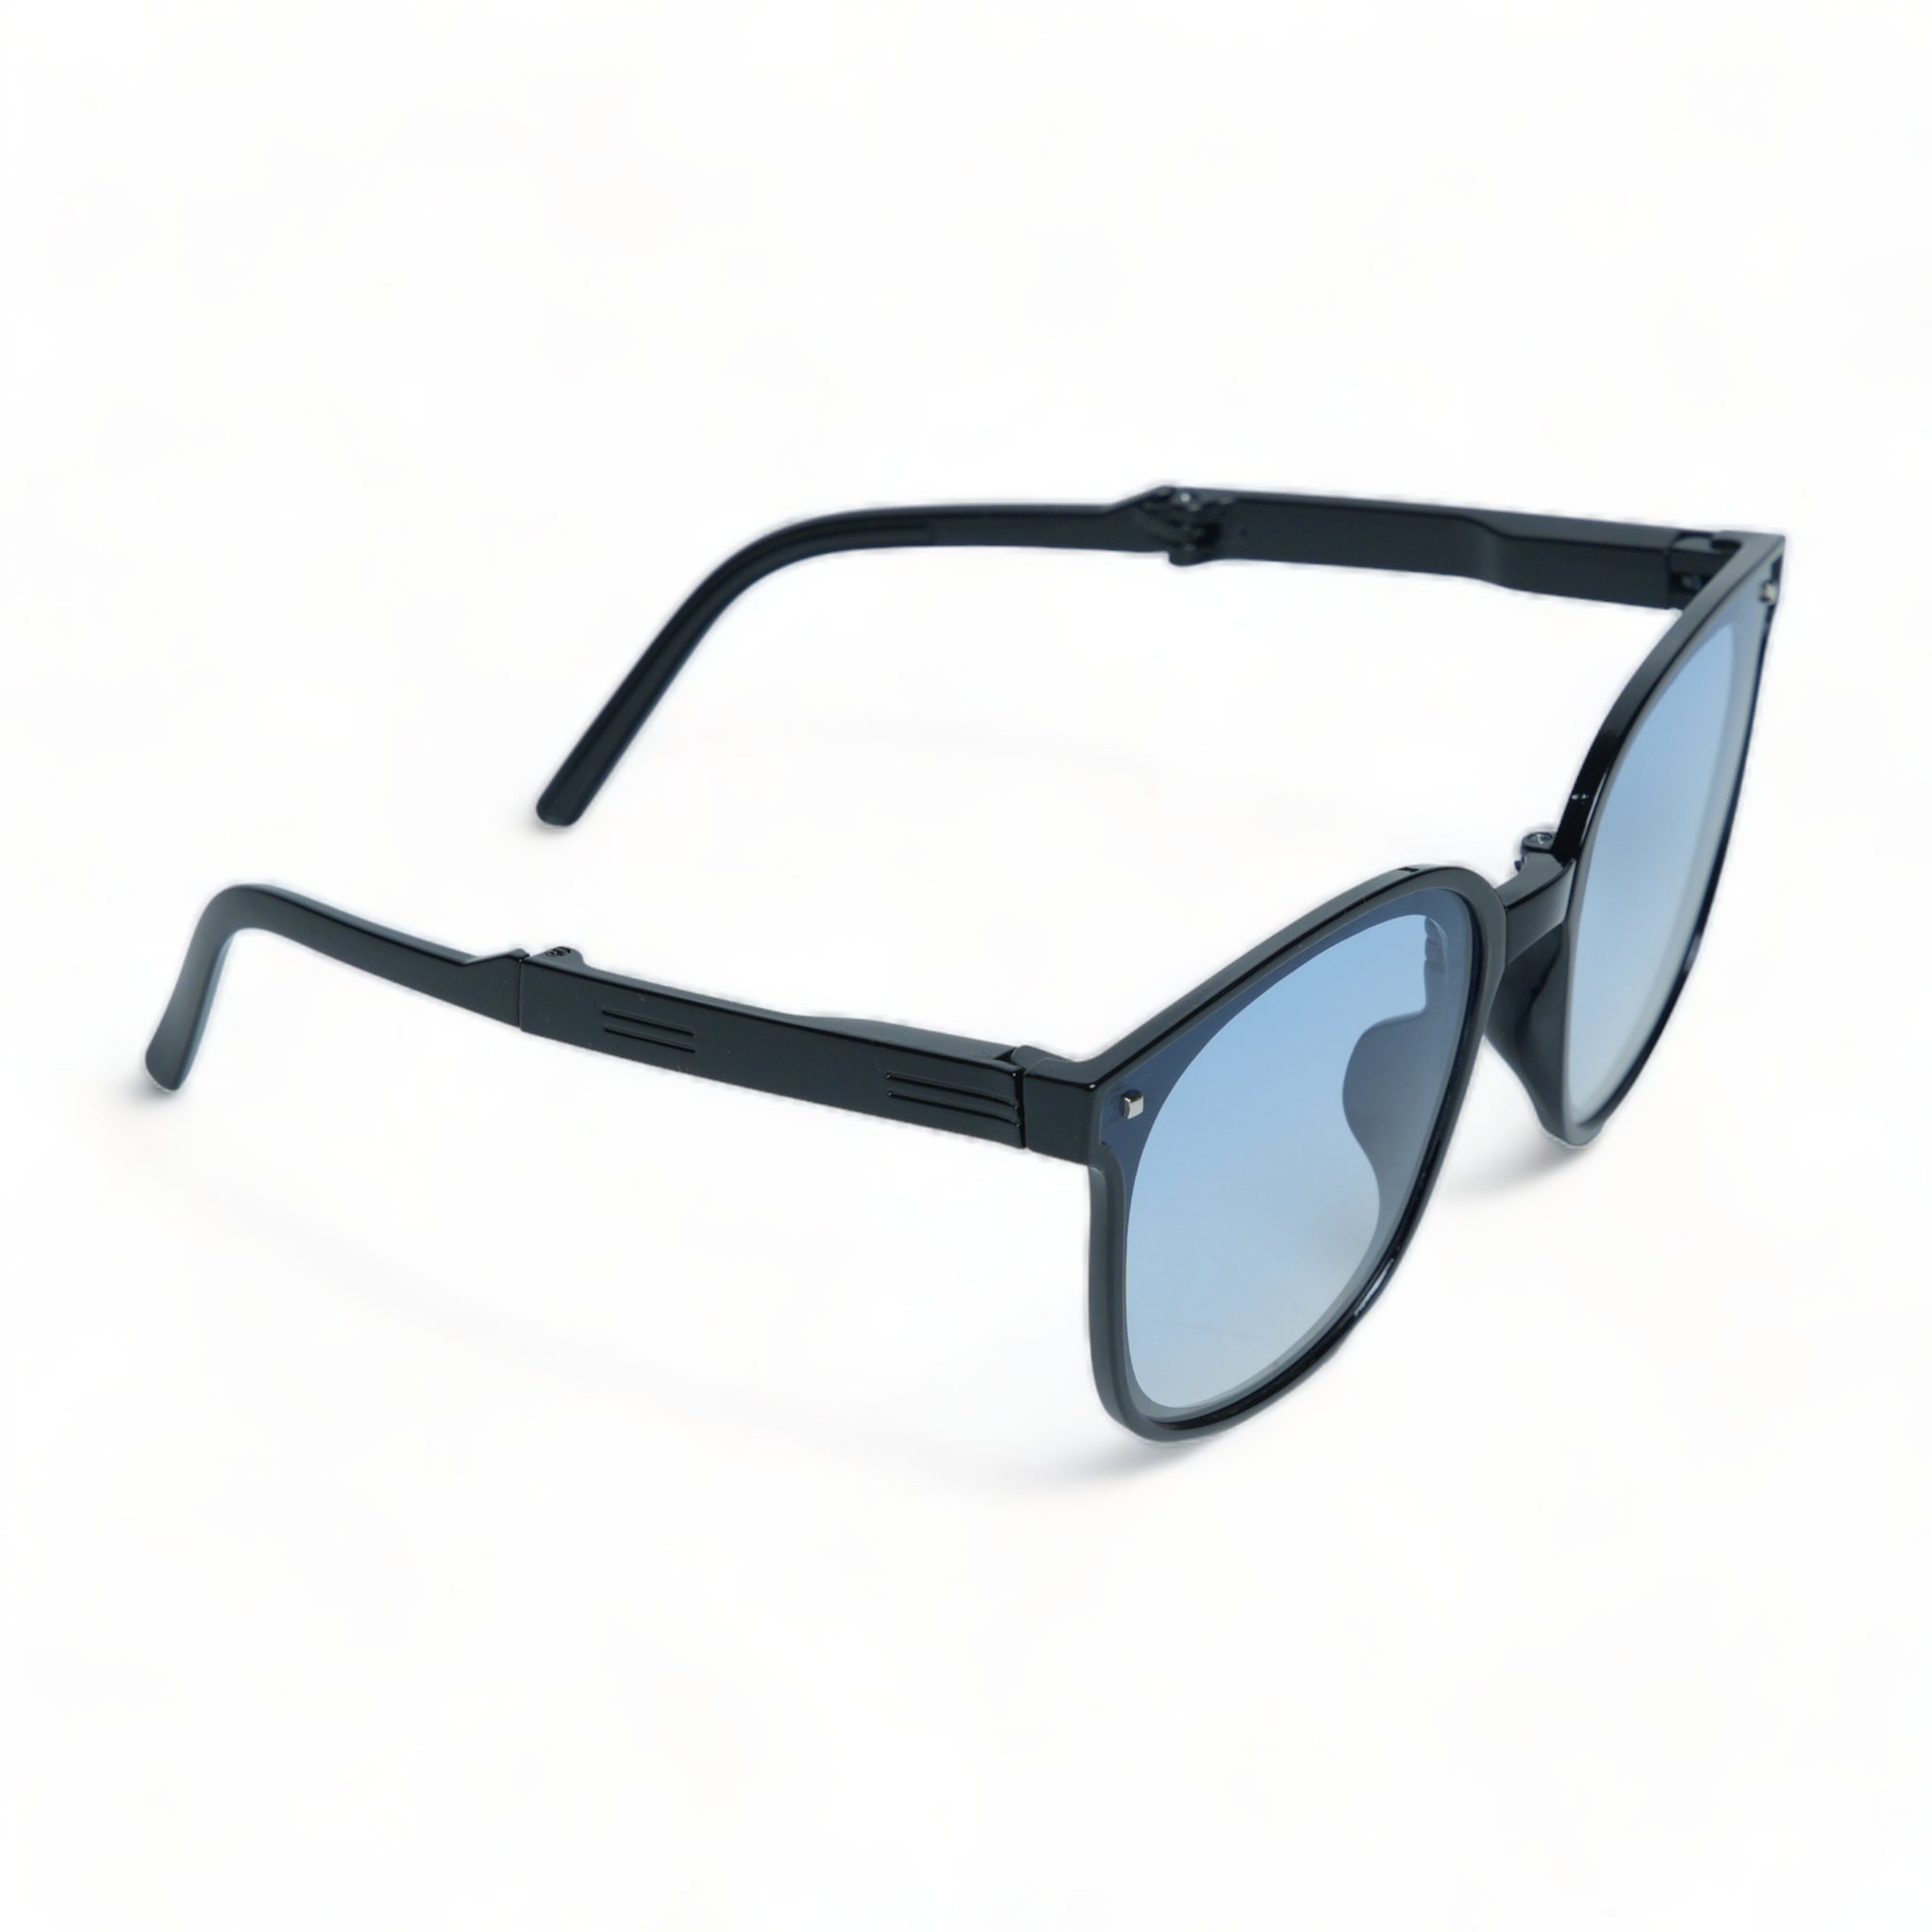 Chokore Stylish Folding Sunglasses with UV 400 Protection (Black & Blue)